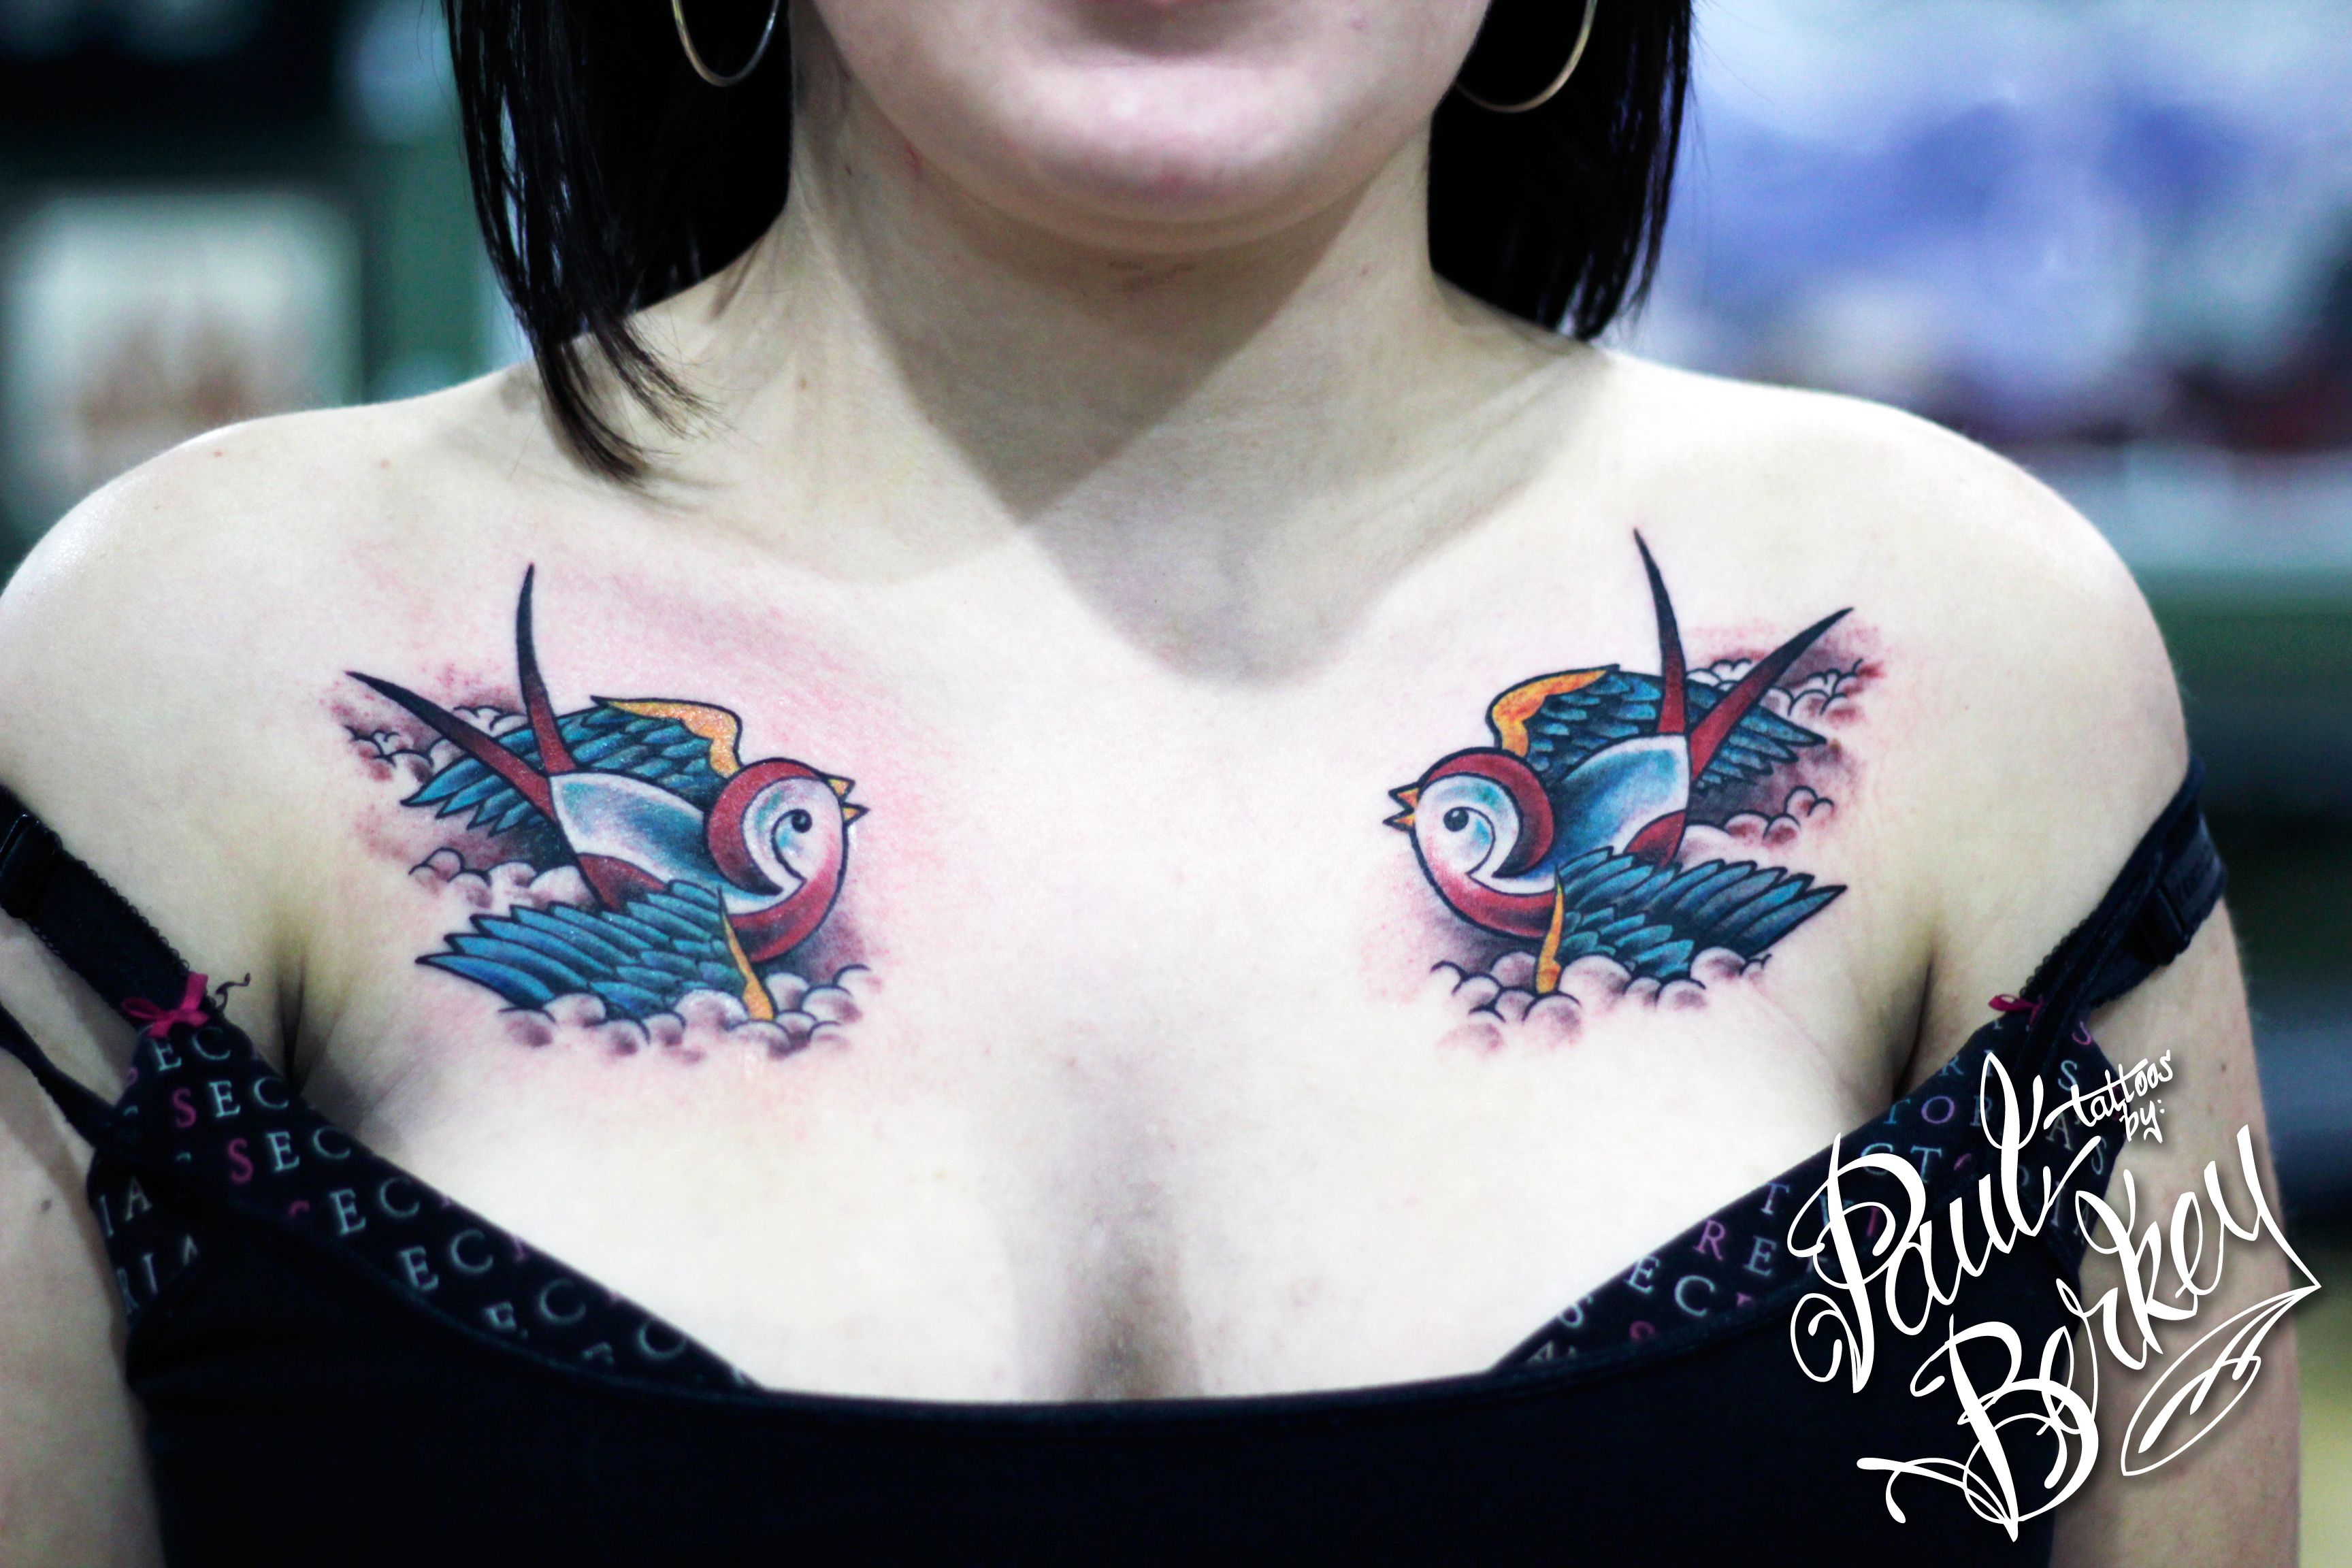 Chest Birds Sparrow Swallows Tattoos Paulberkey Tattoos within dimensions 3456 X 2304